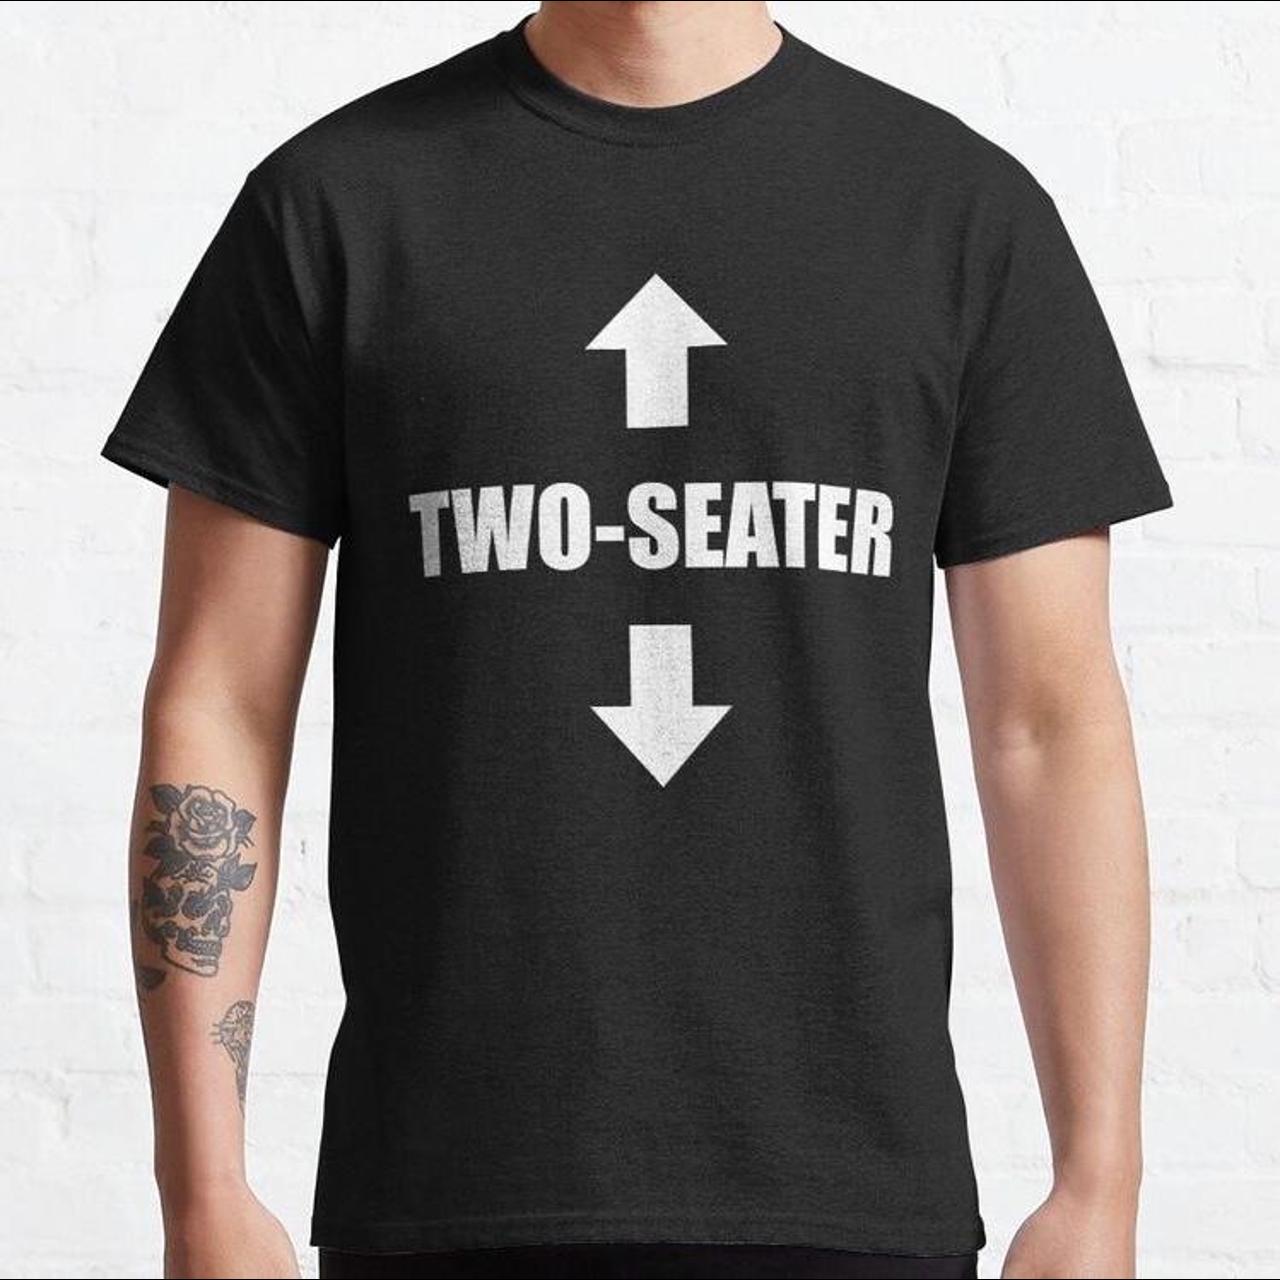 Two seater T-shirt Black T-shirt Brand new FREE... - Depop